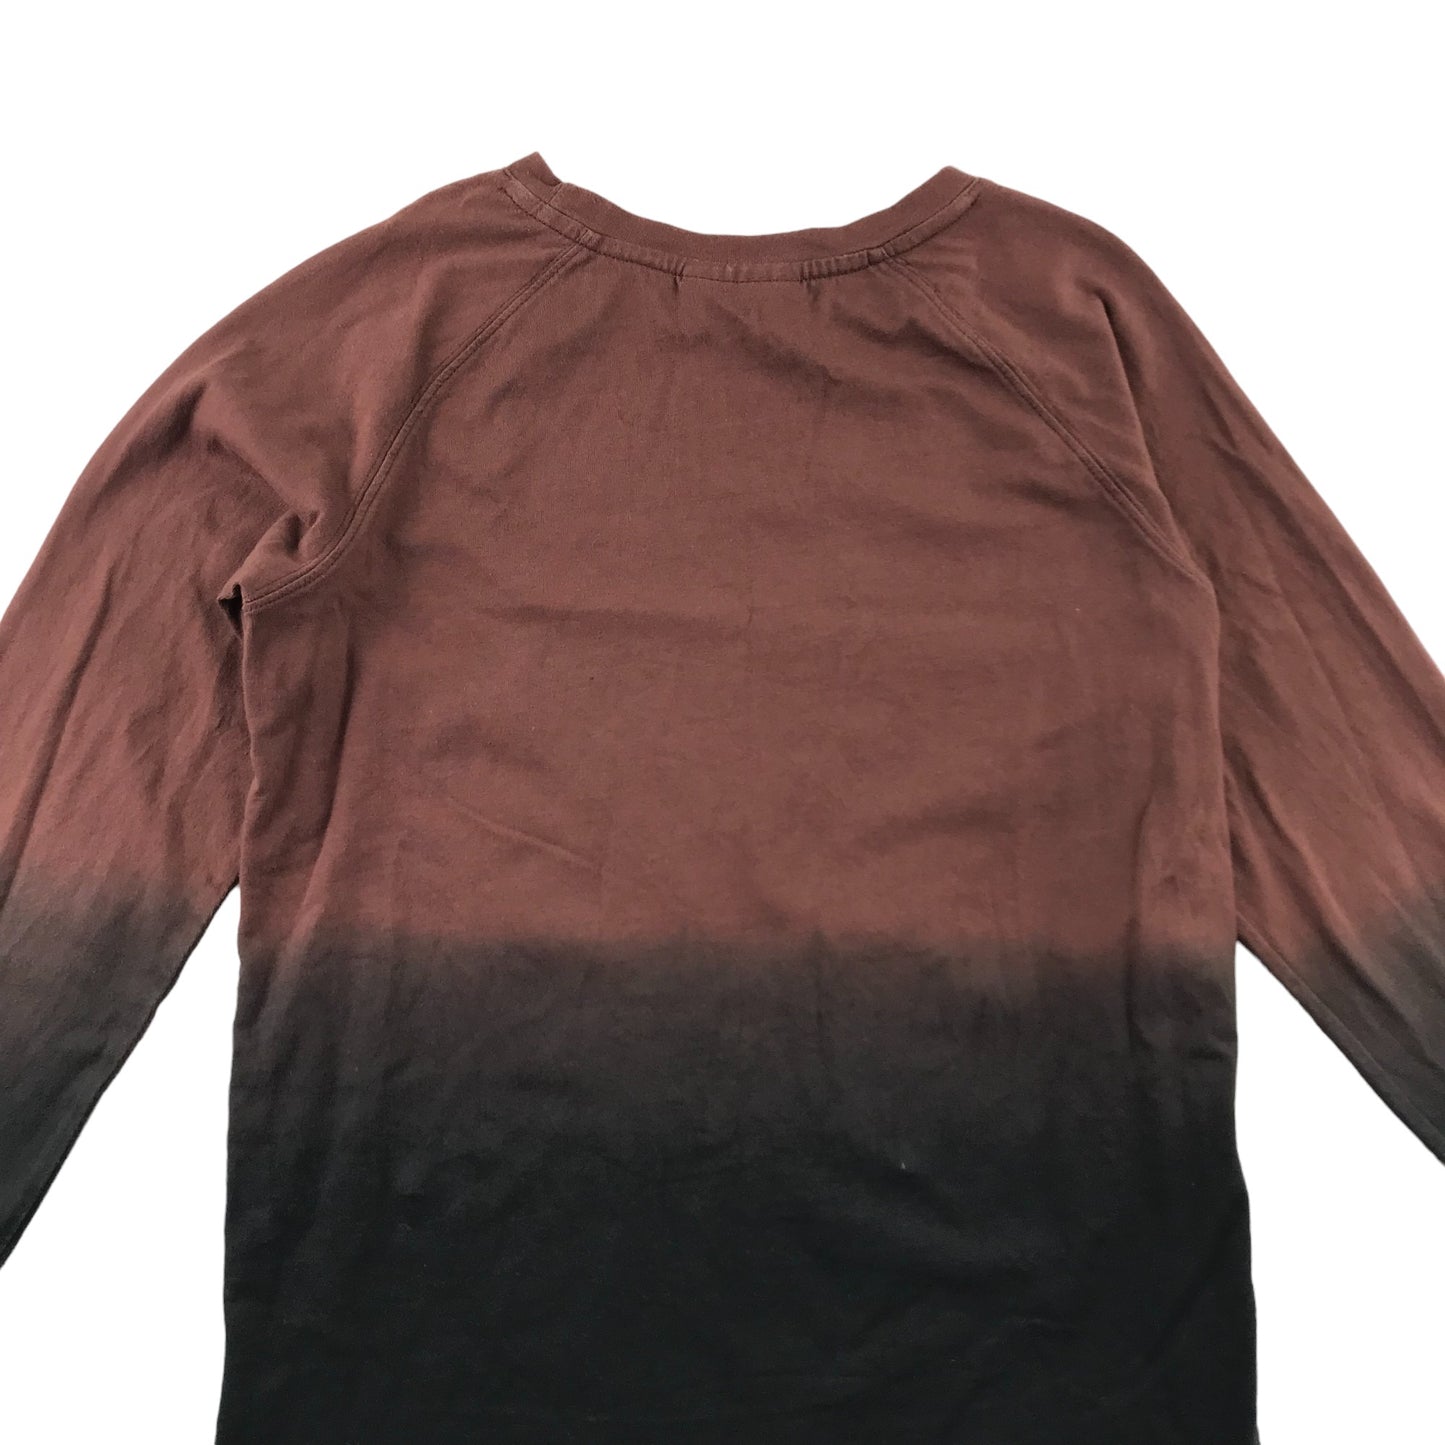 Milk Copenhagen T-shirt Age 12-13 Brown and Black Gradient Number Print Long Sleeve Cotton